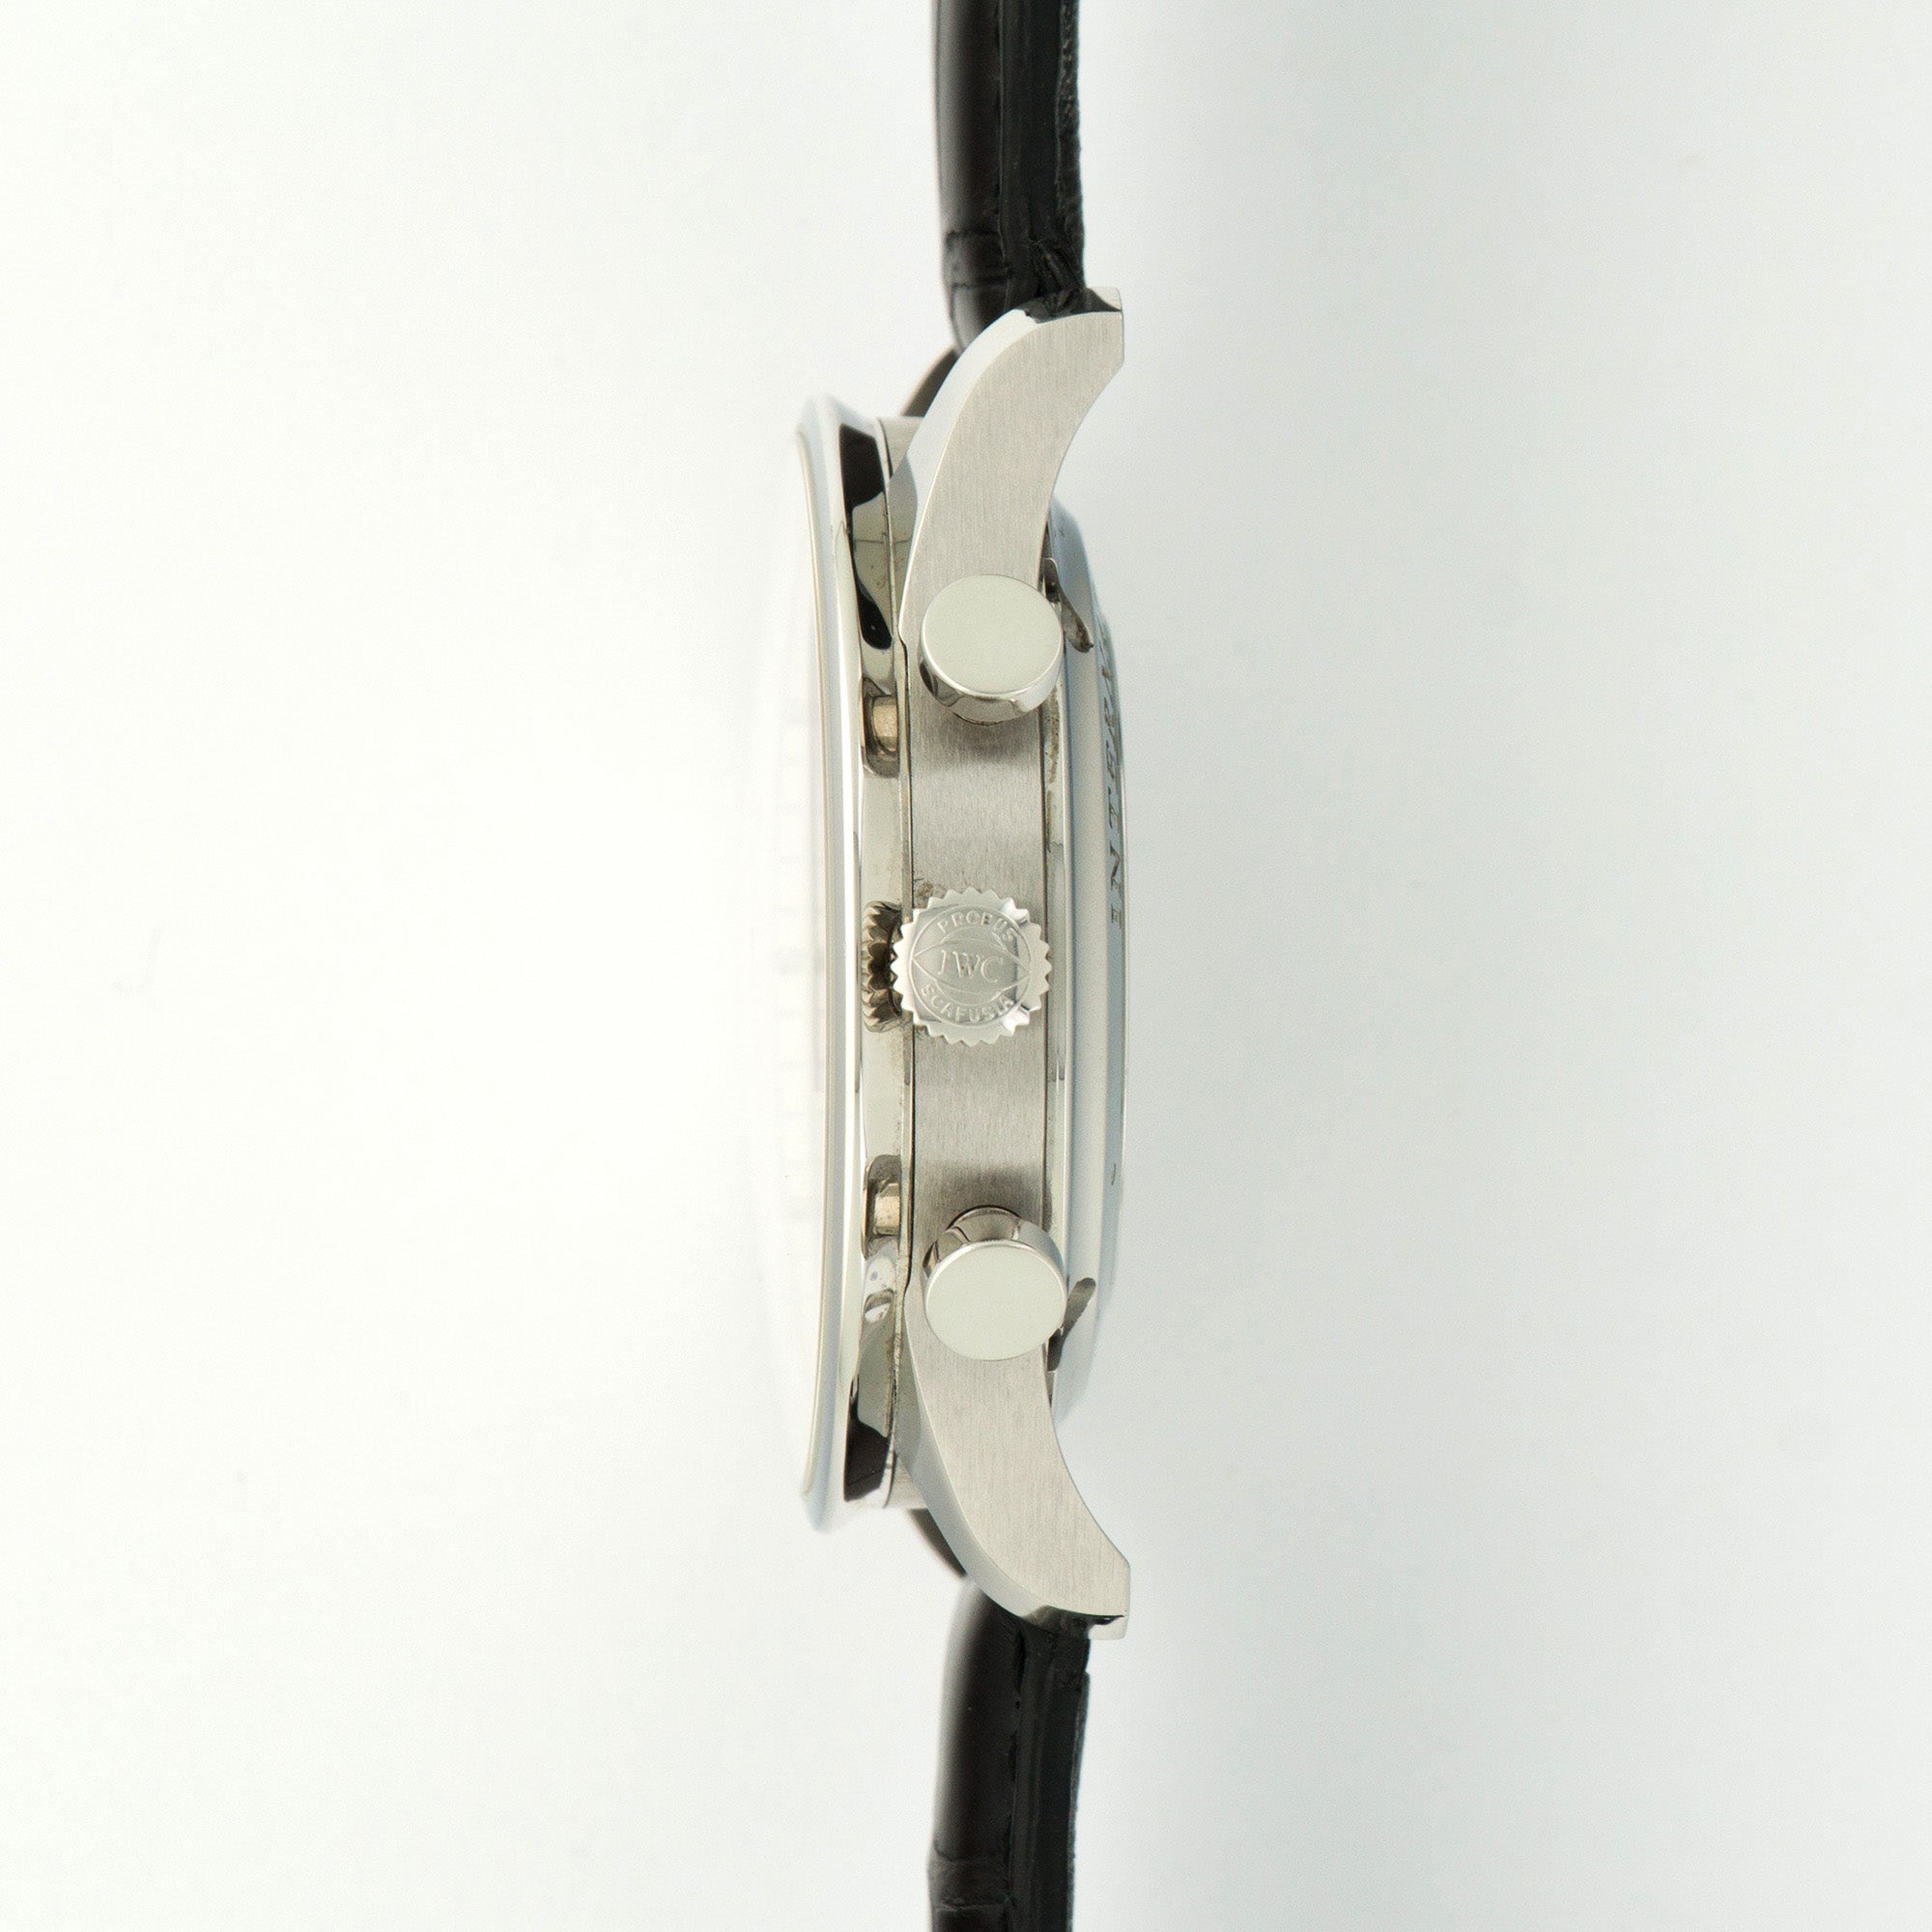 IWC - IWC Steel Portuguese Chronographon Strap Watch Ref. 3714 - The Keystone Watches